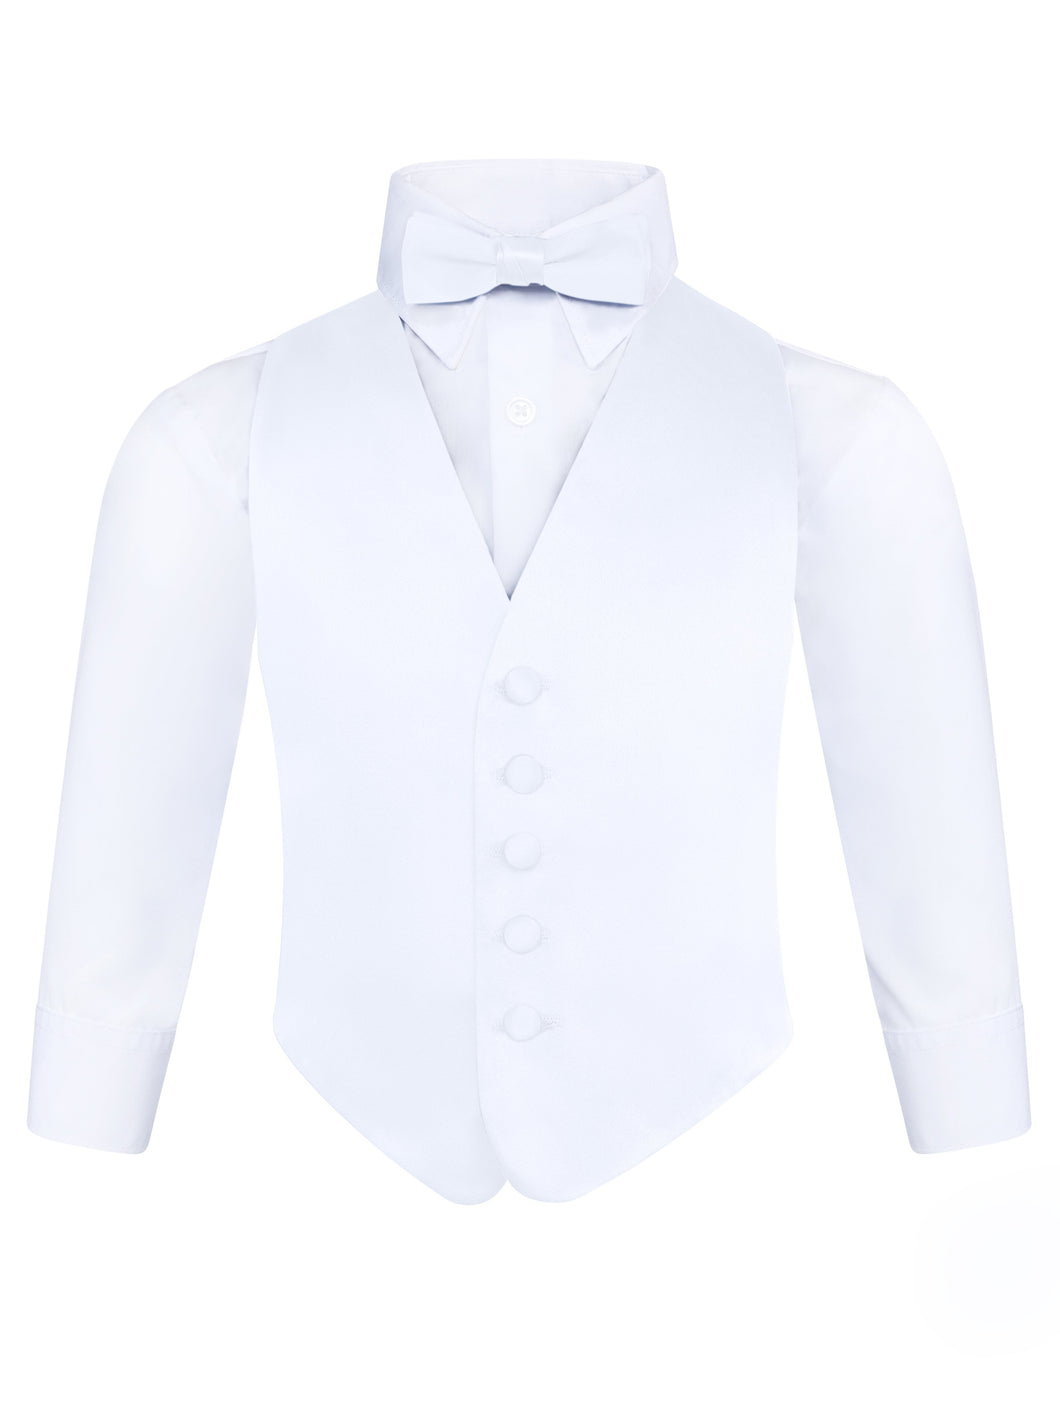 S.H. Churchill & Co. Boy's 3 Piece White Backless Formal Vest Set - Includes Vest, Bow Tie, Pocket Square for Tuxedo or Suit